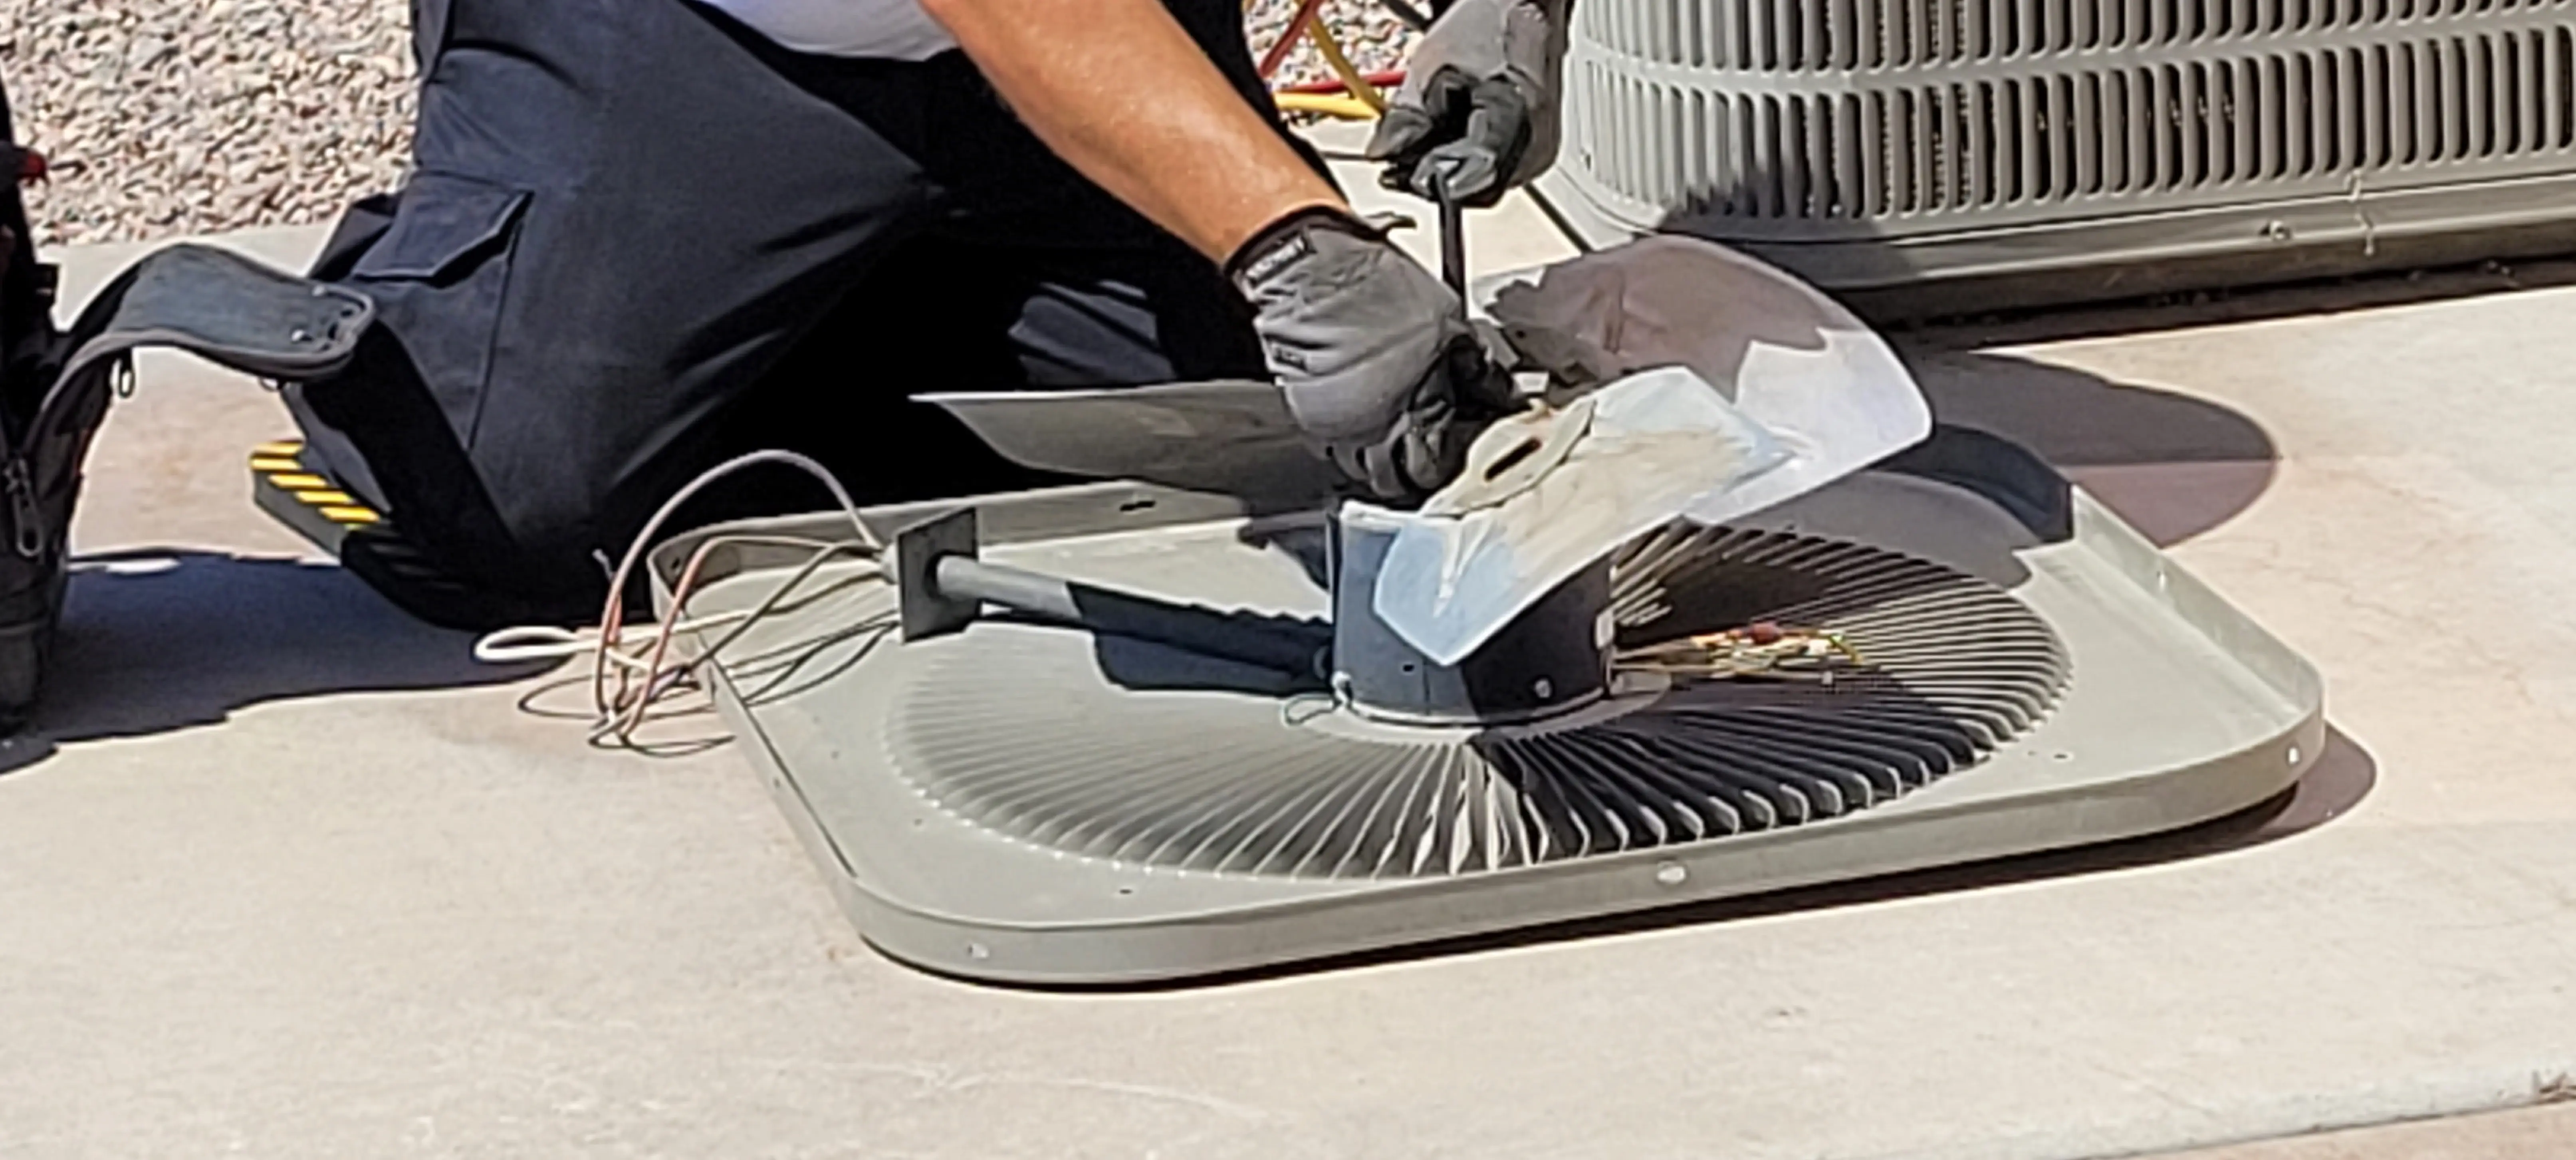 Air-Conditioning-Repair--in-Austin-Texas-Air-Conditioning-Repair-4296816-image